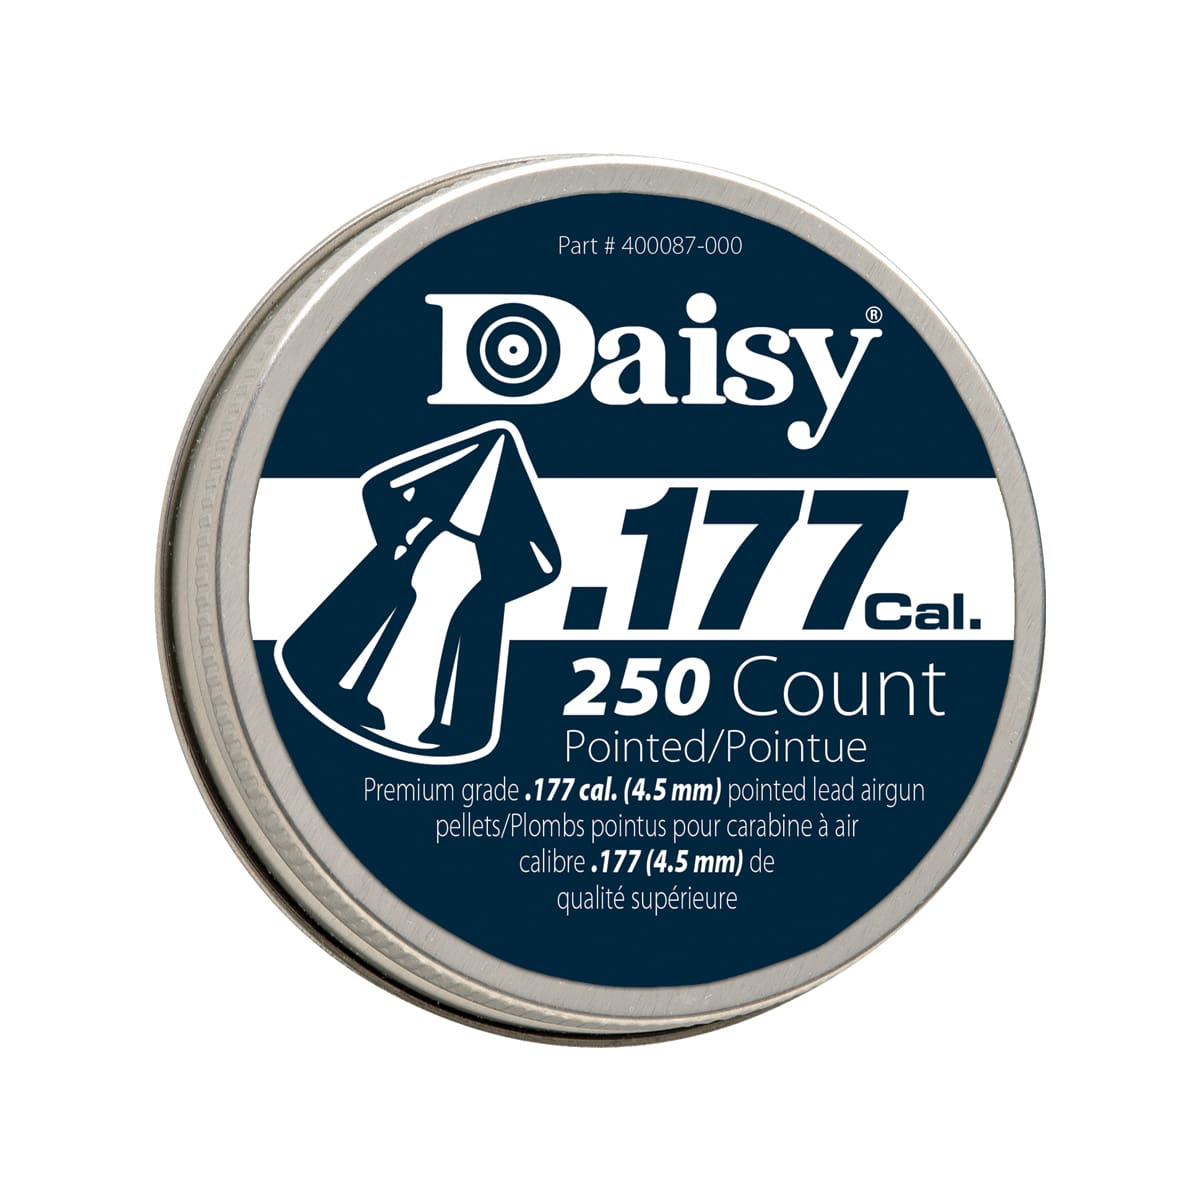 2x Daisy 7597 Premium Grade .177 Caliber Flatnosed Pellets for sale online 